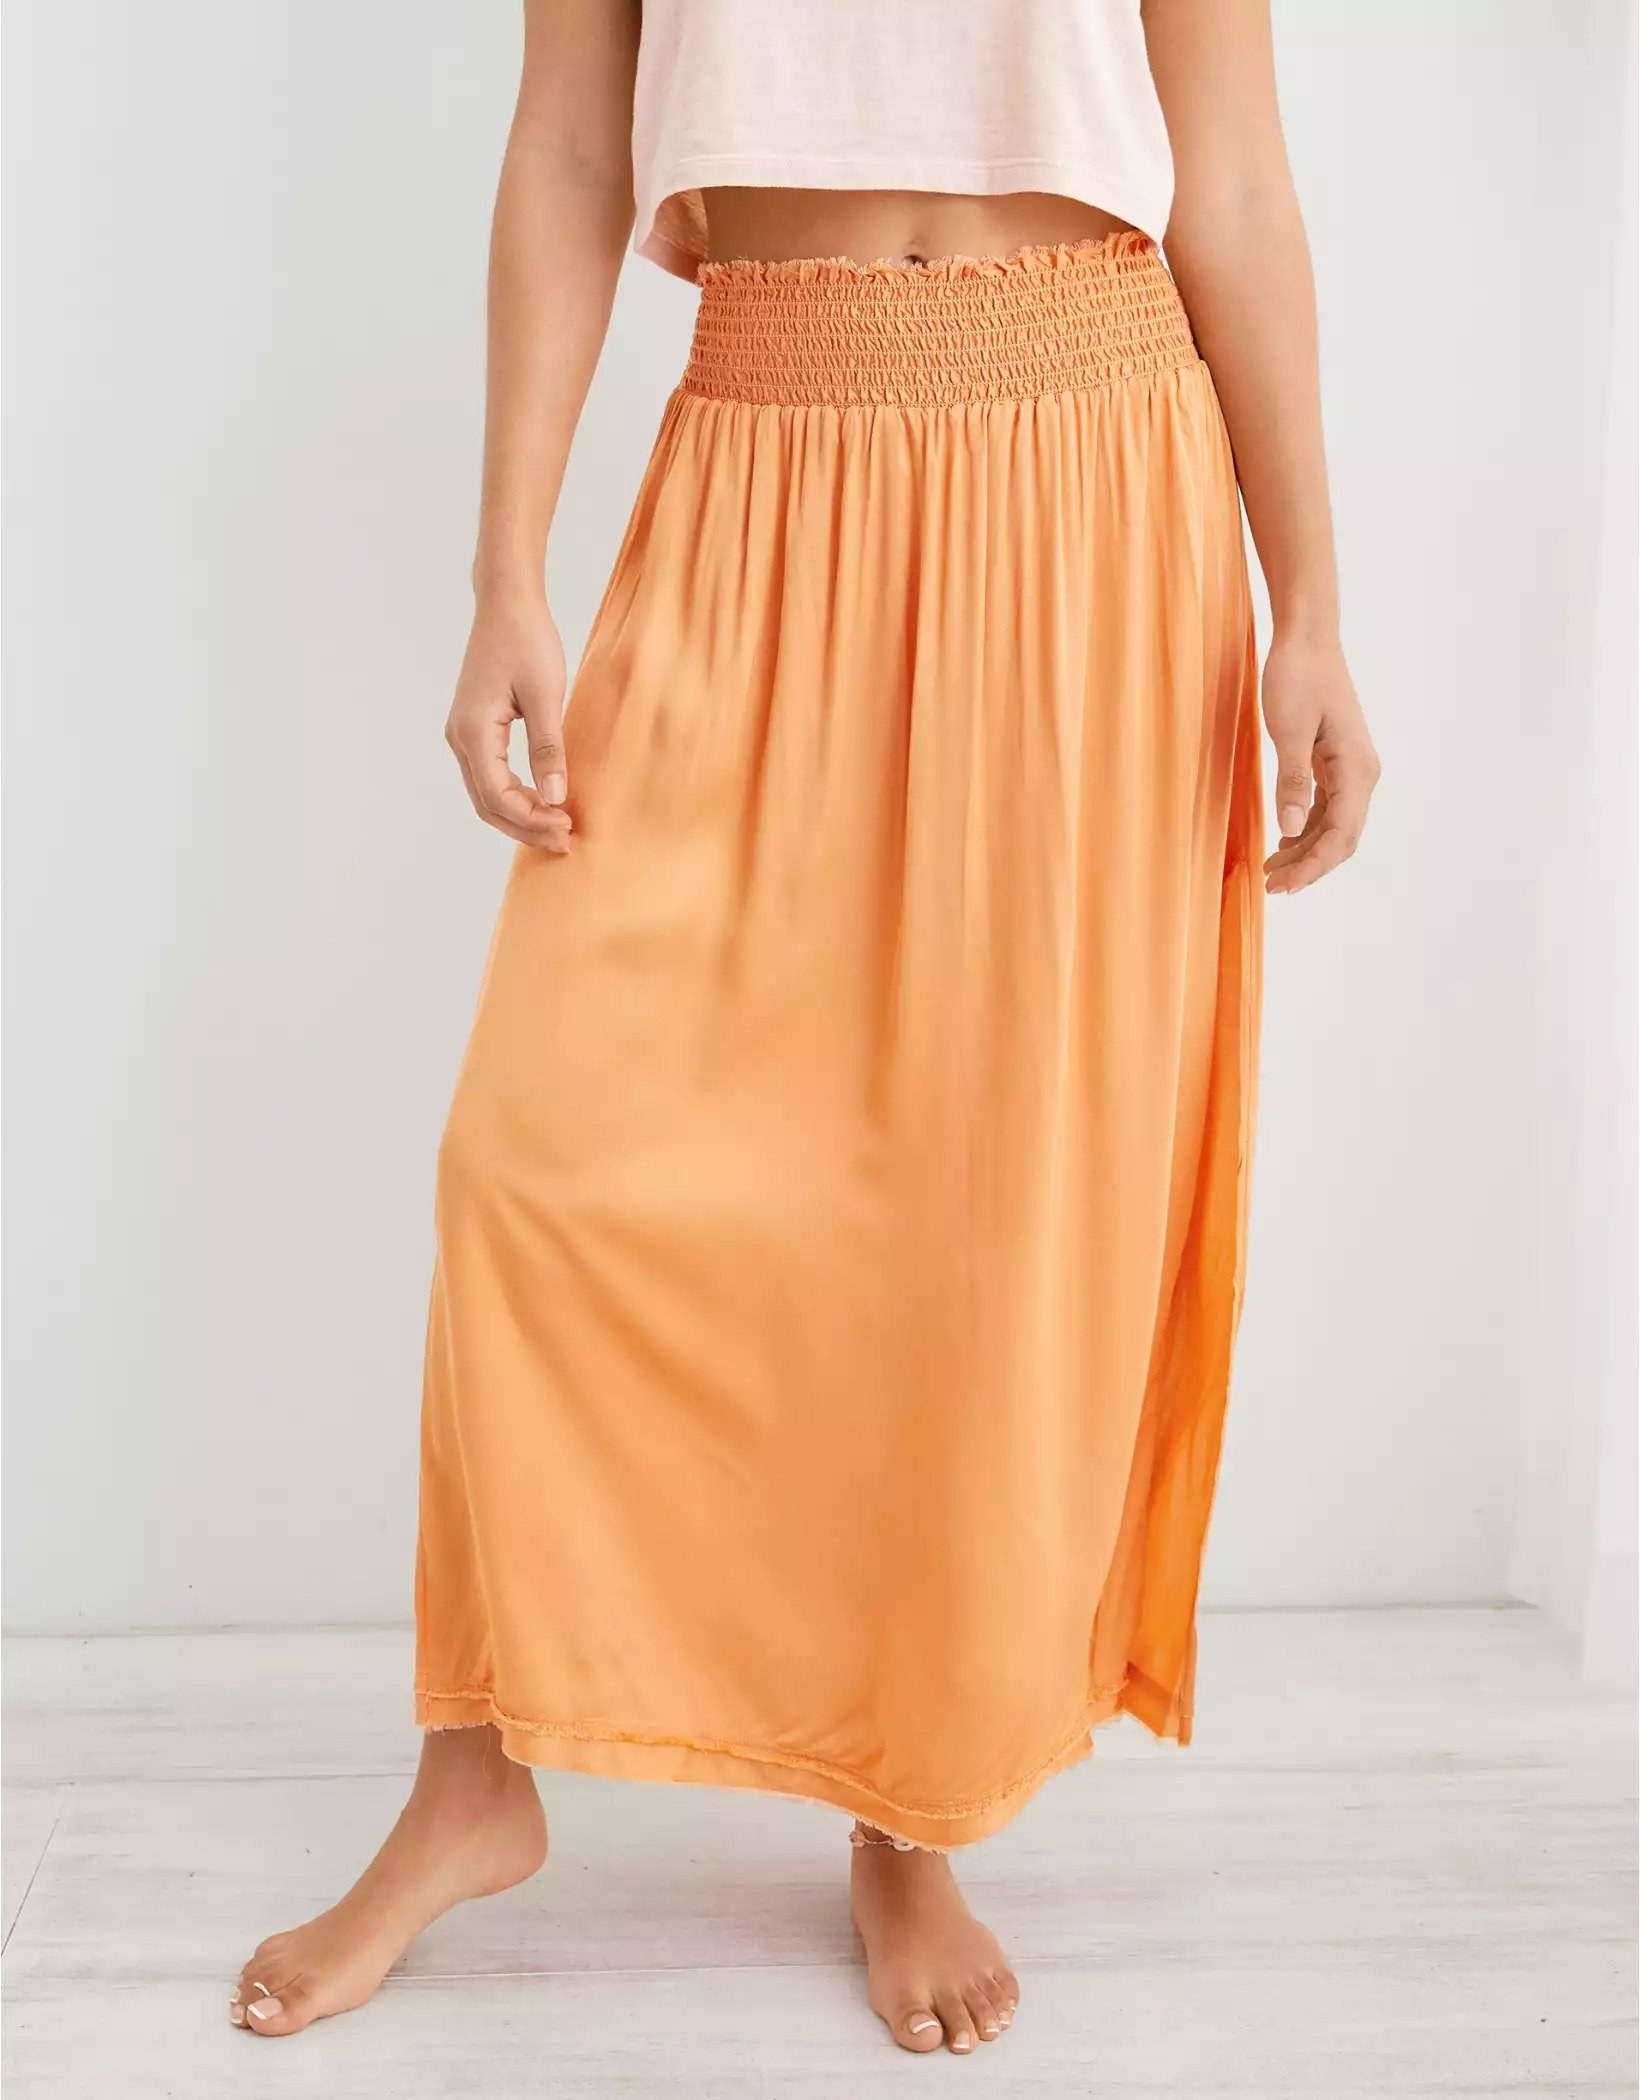 Model wearing orange midi skirt